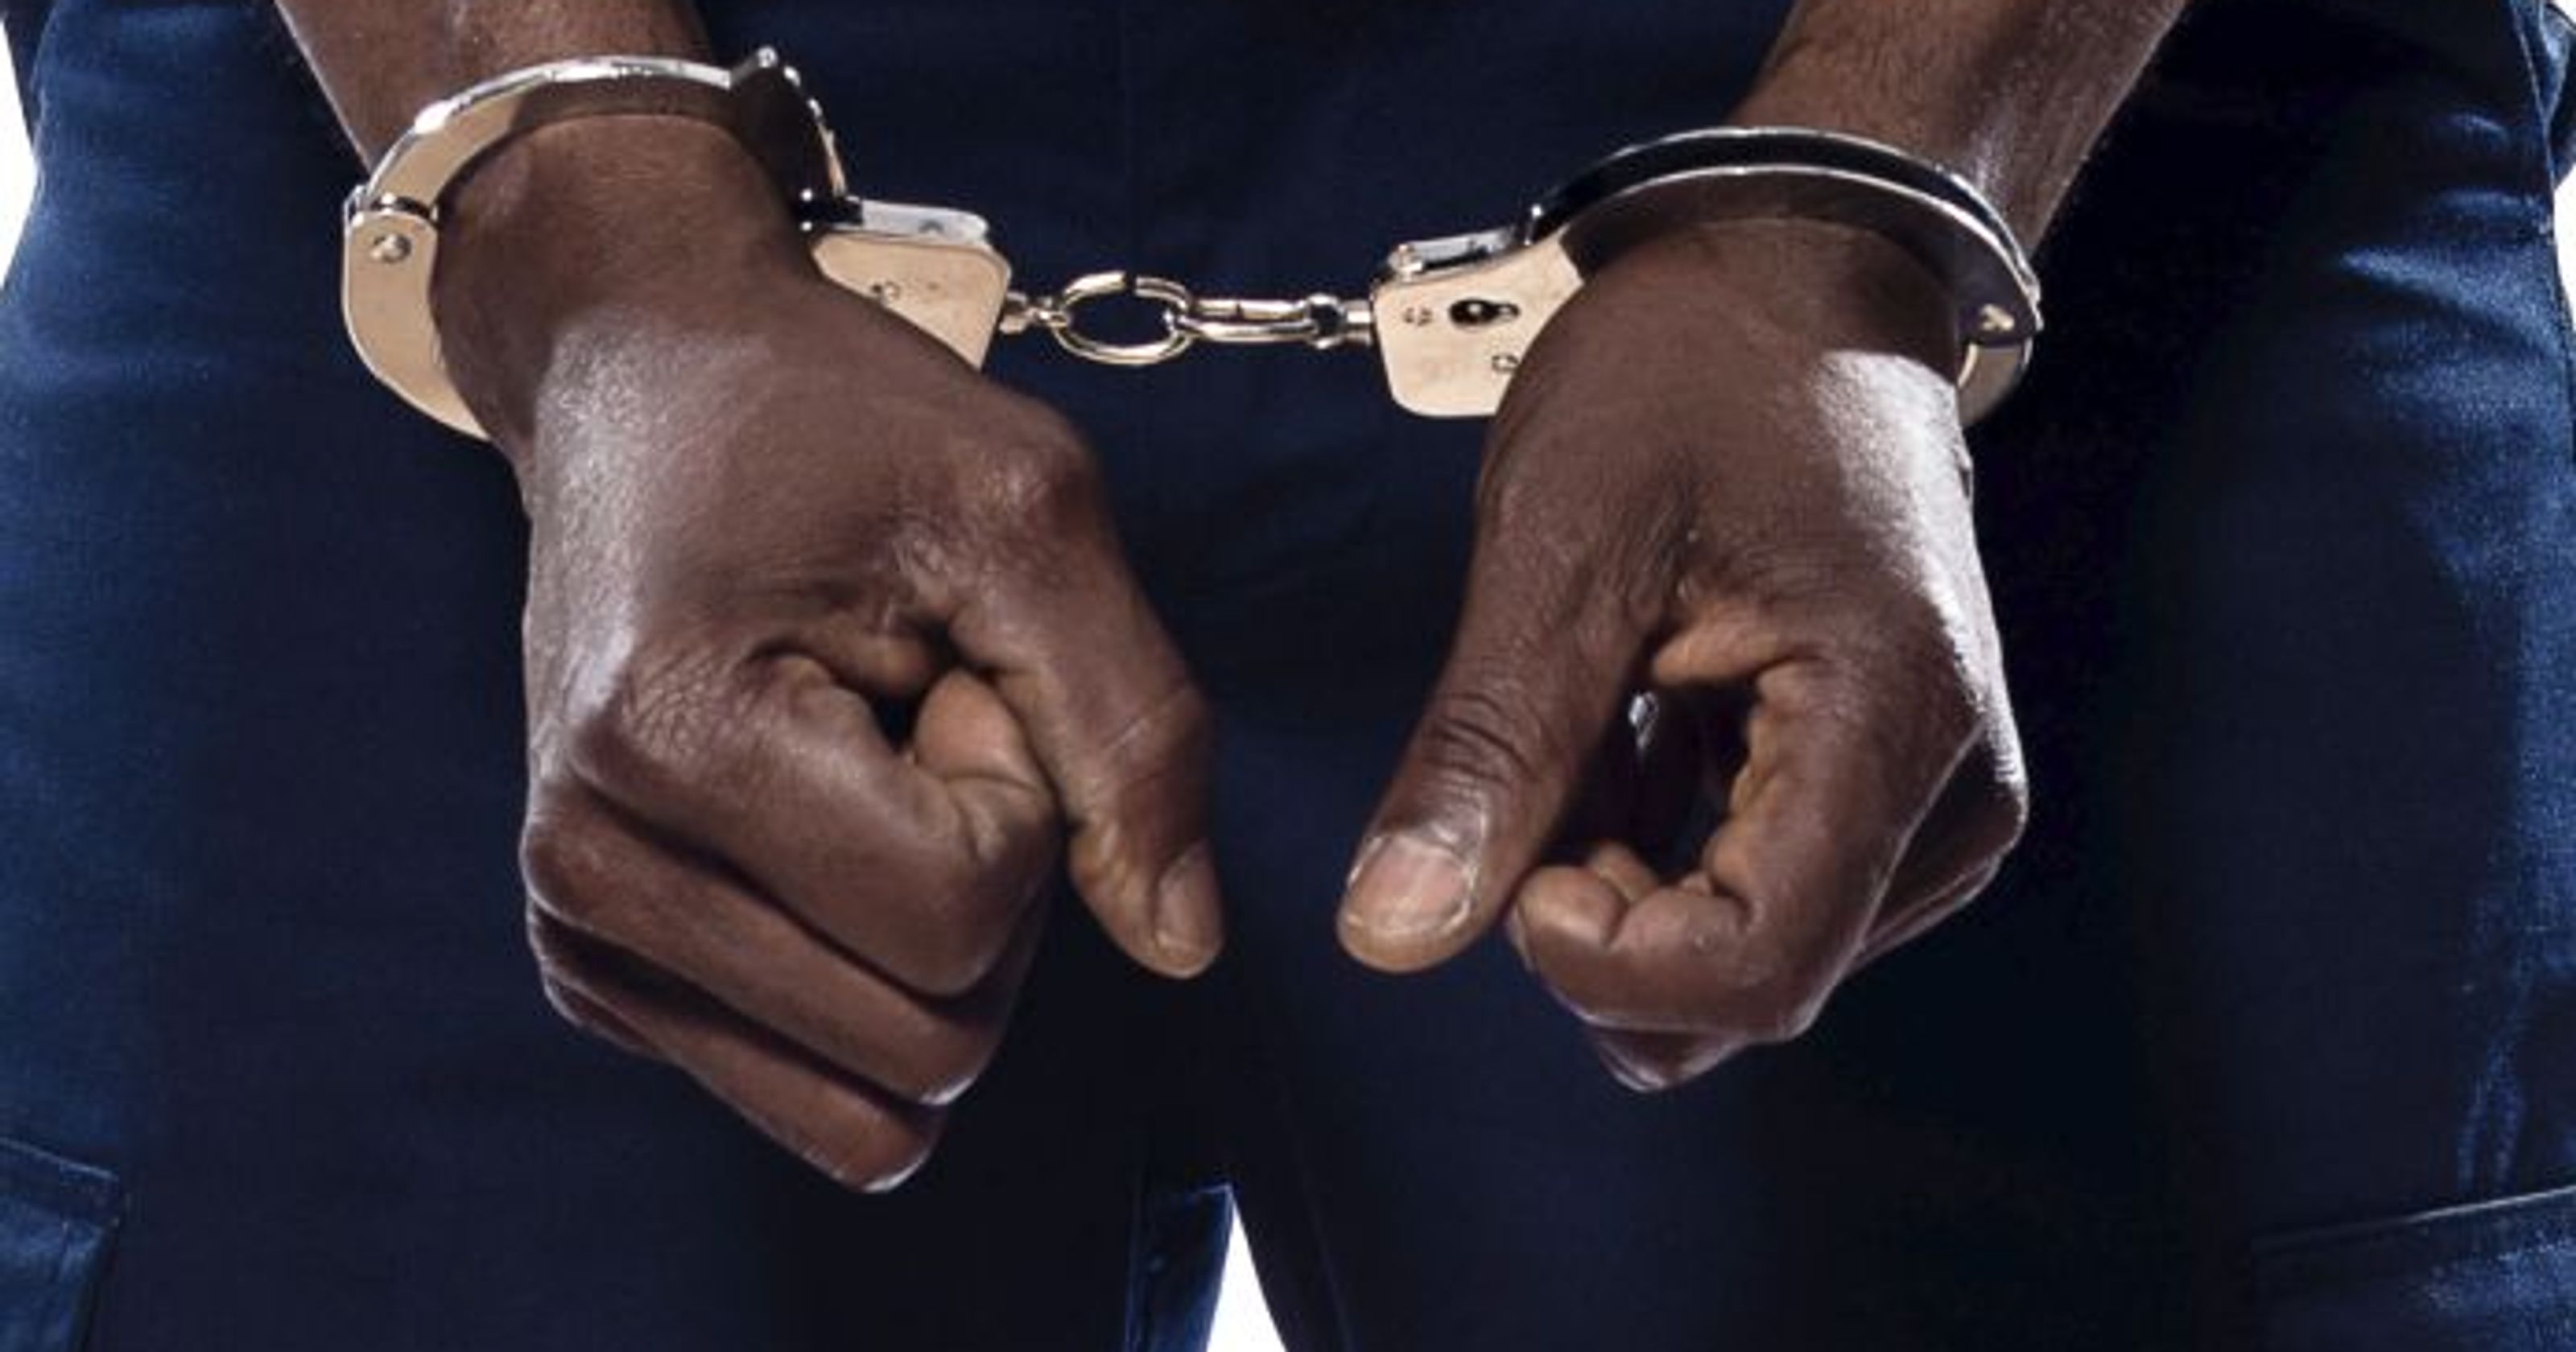 19-year-old teenage gang member sentenced to 12 years imprisonment